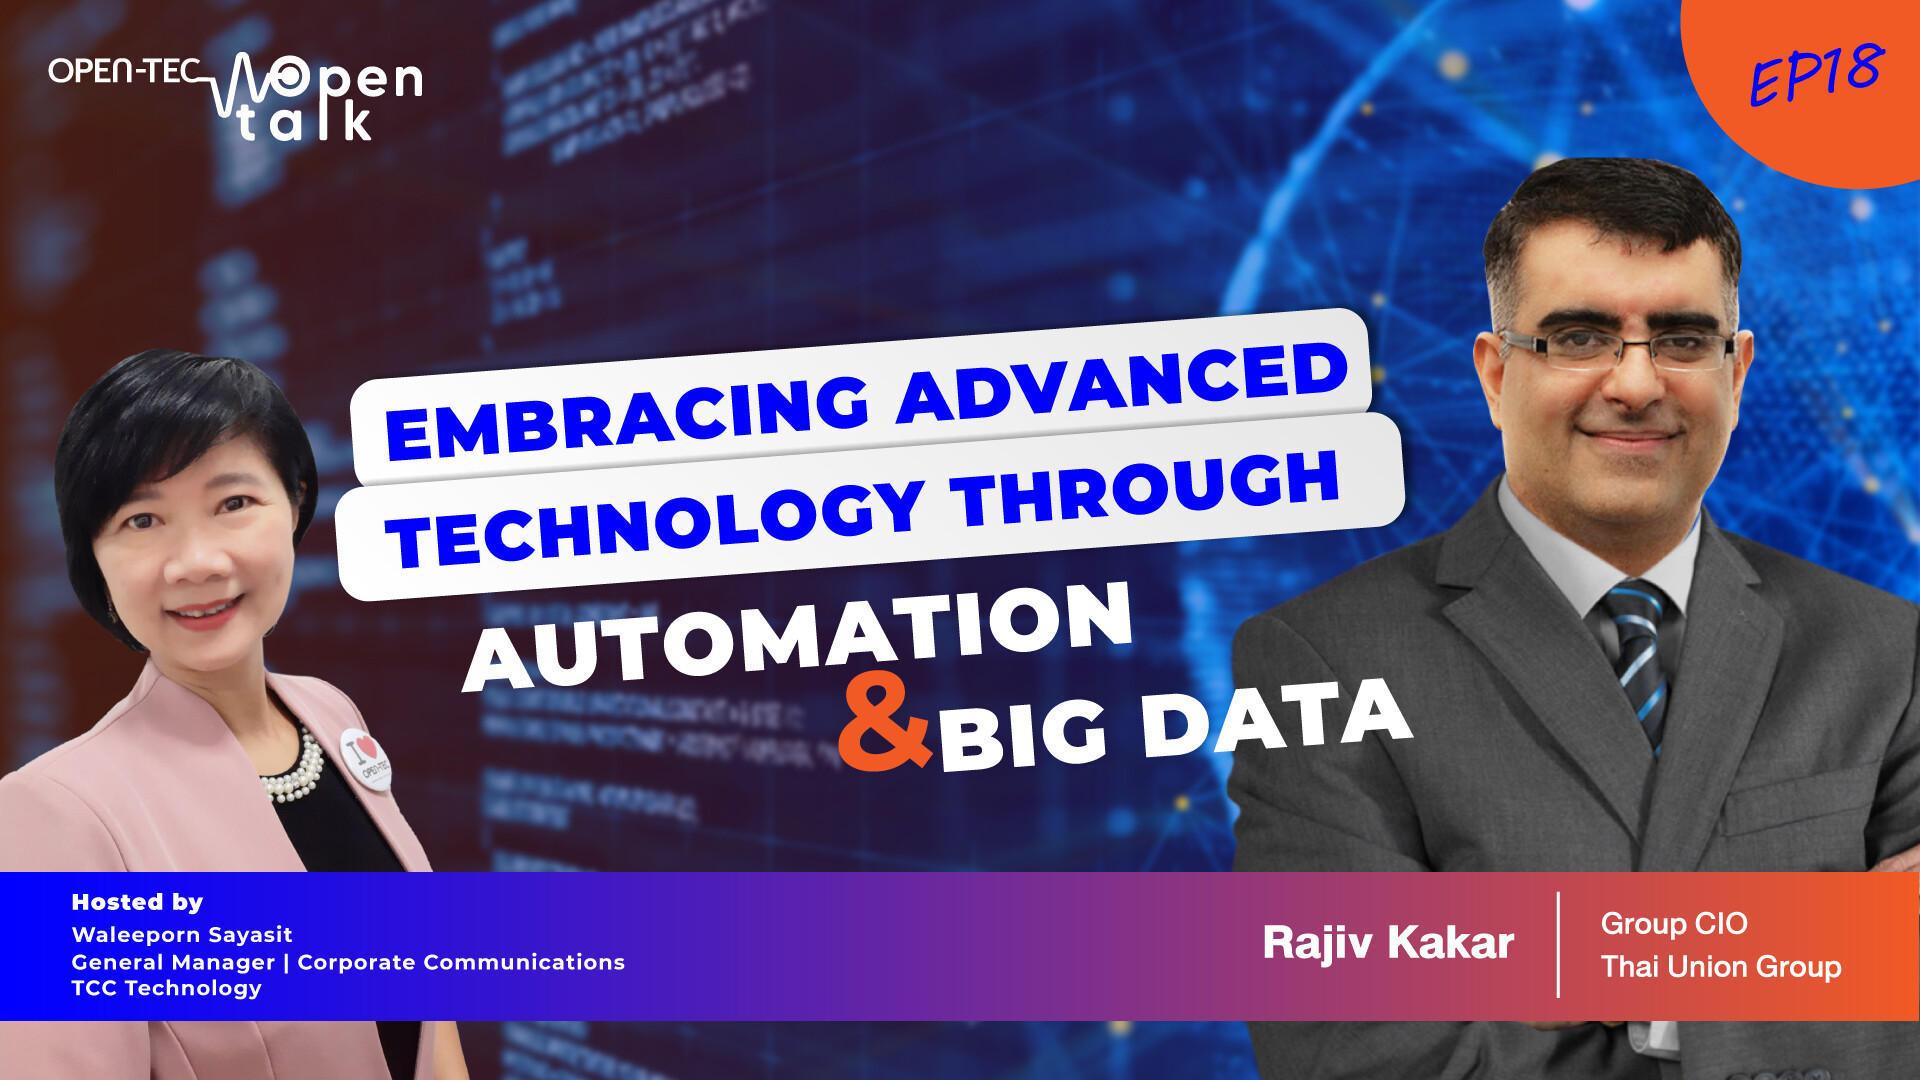 Embracing Advanced Technology Through Automation & Big Data